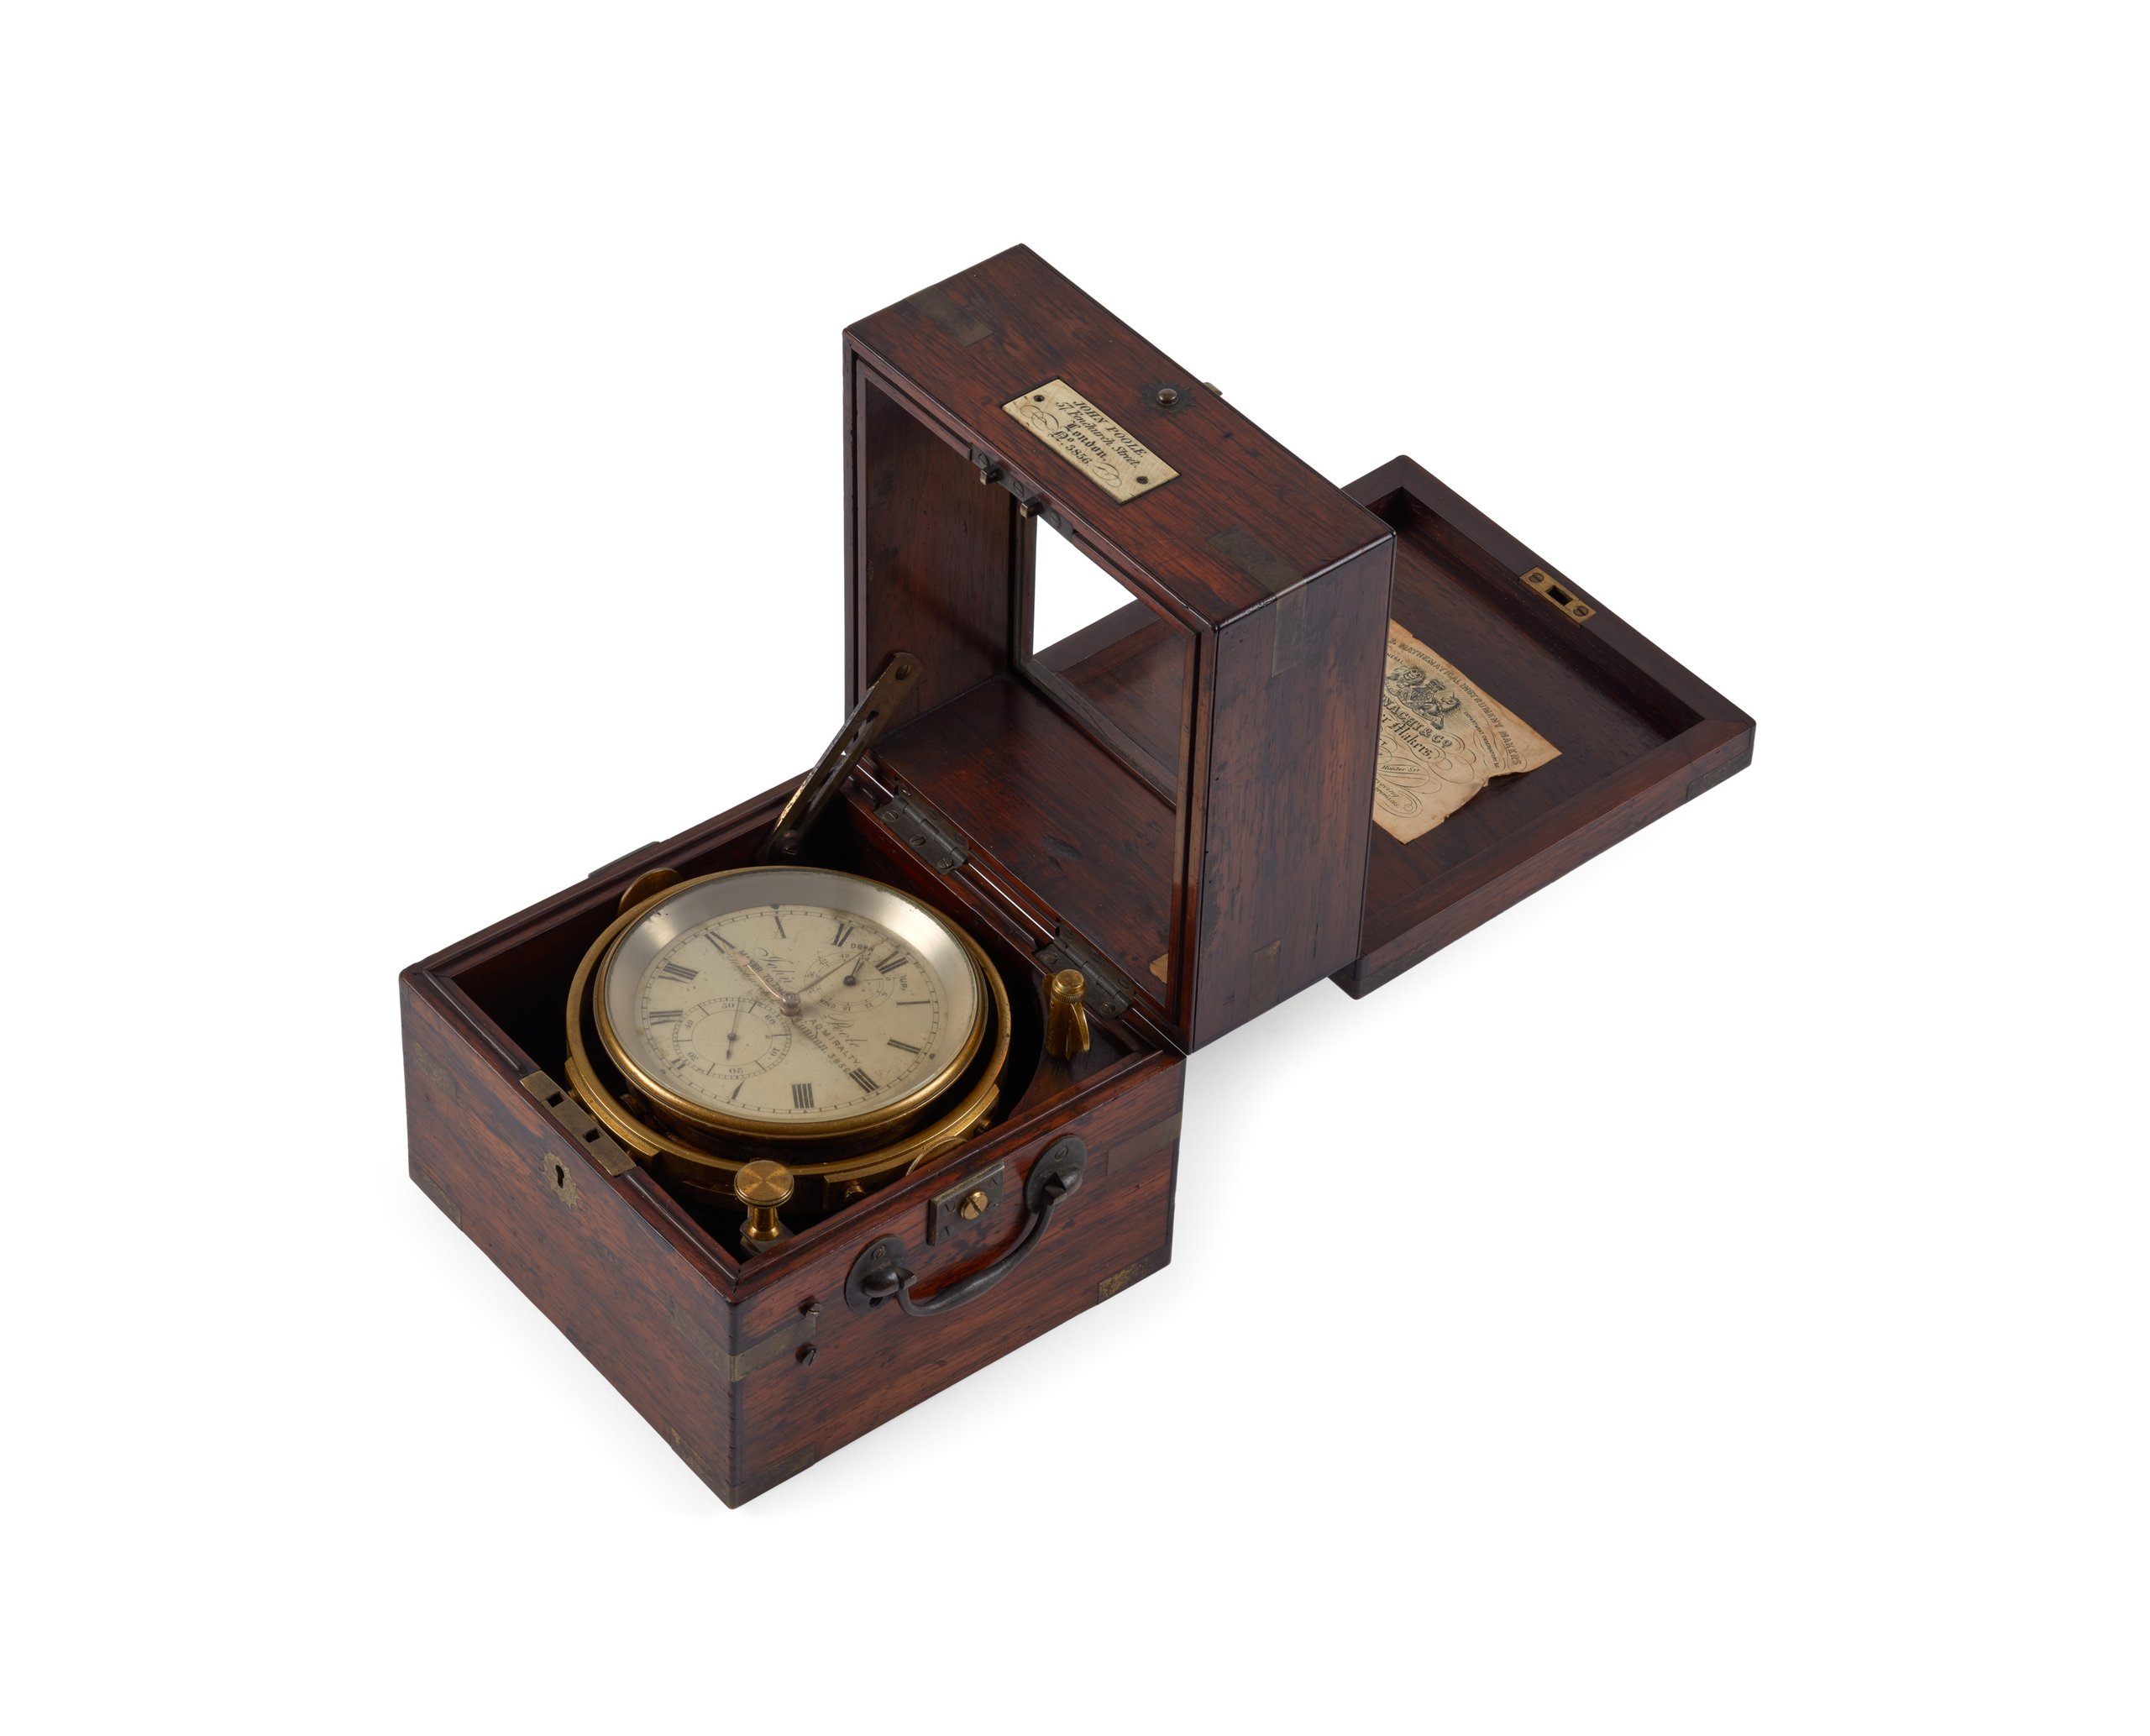 Marine chronometer made by John Poole